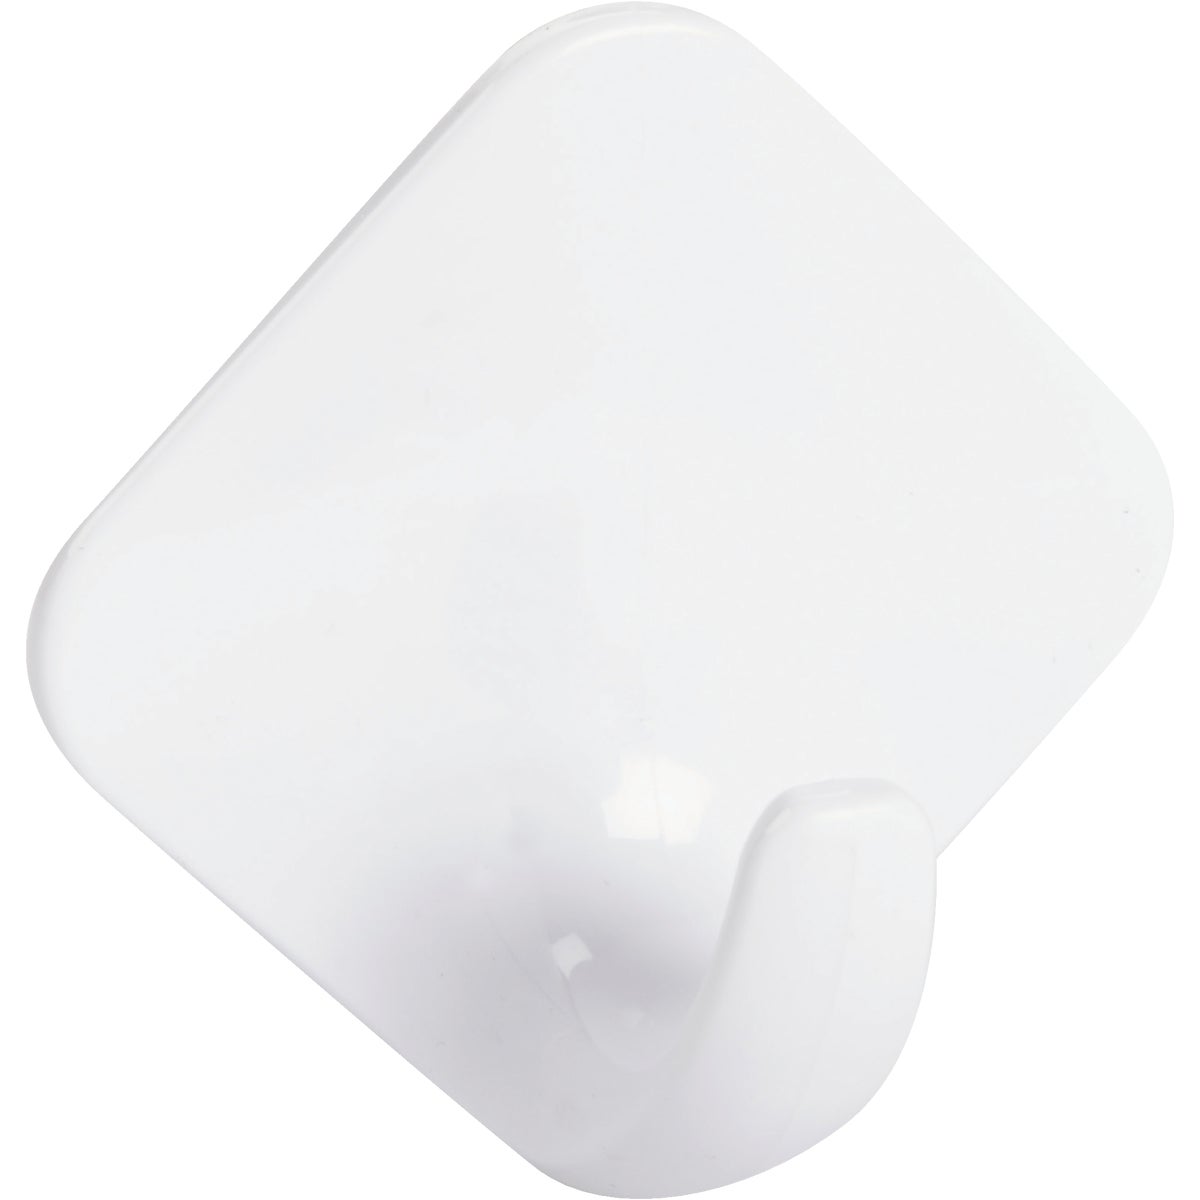 Item 604000, White plastic self-adhesive hook has numerous uses around the house.